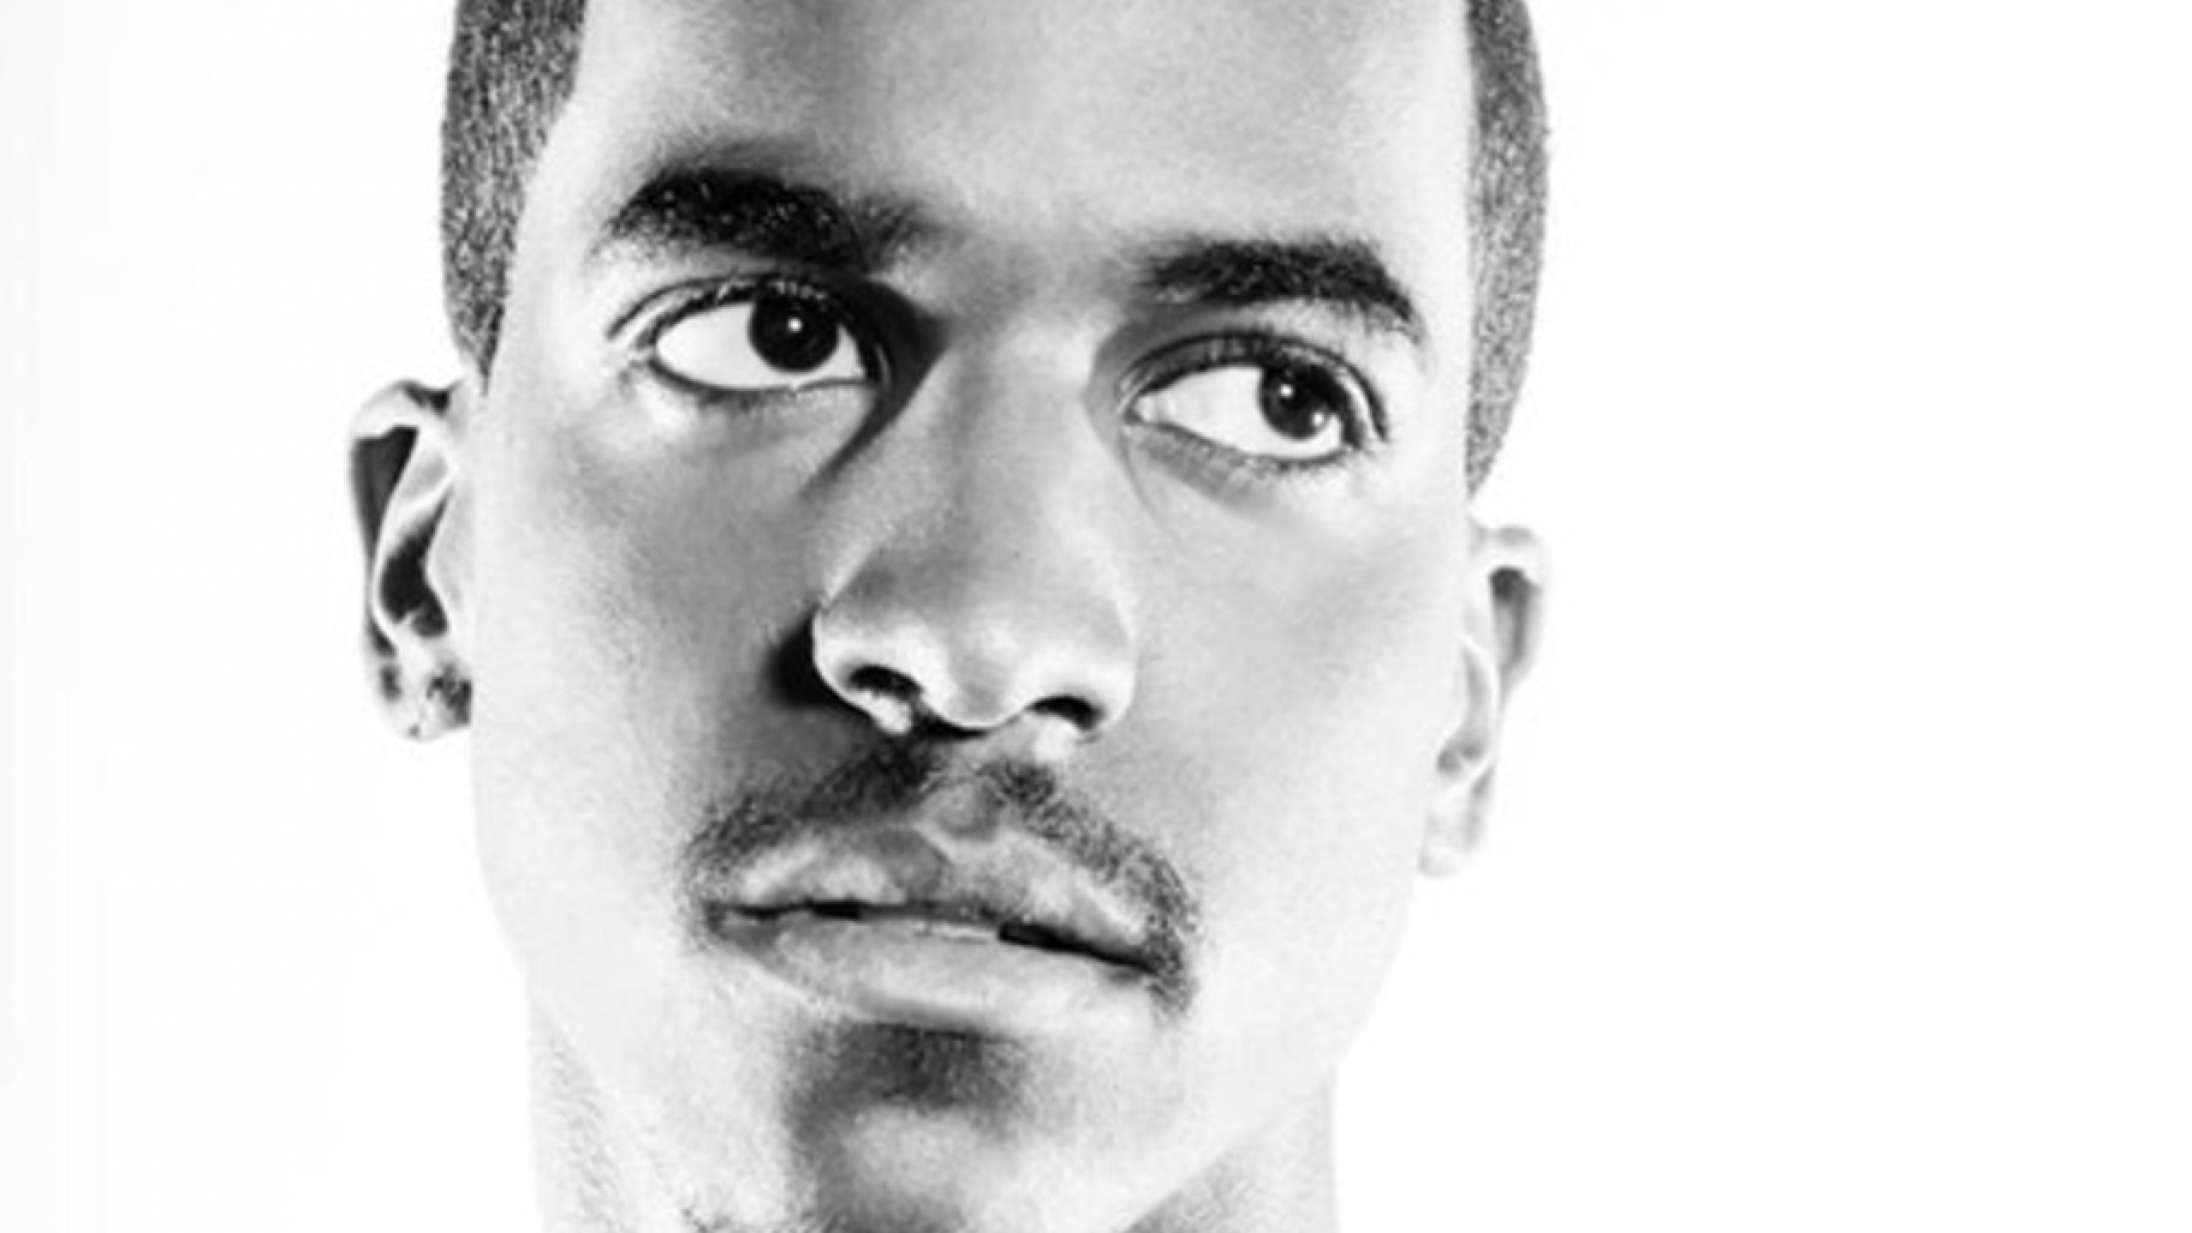 Drill-rapperen Lil Reese er blevet skudt i Chicago – tilstand kritisk